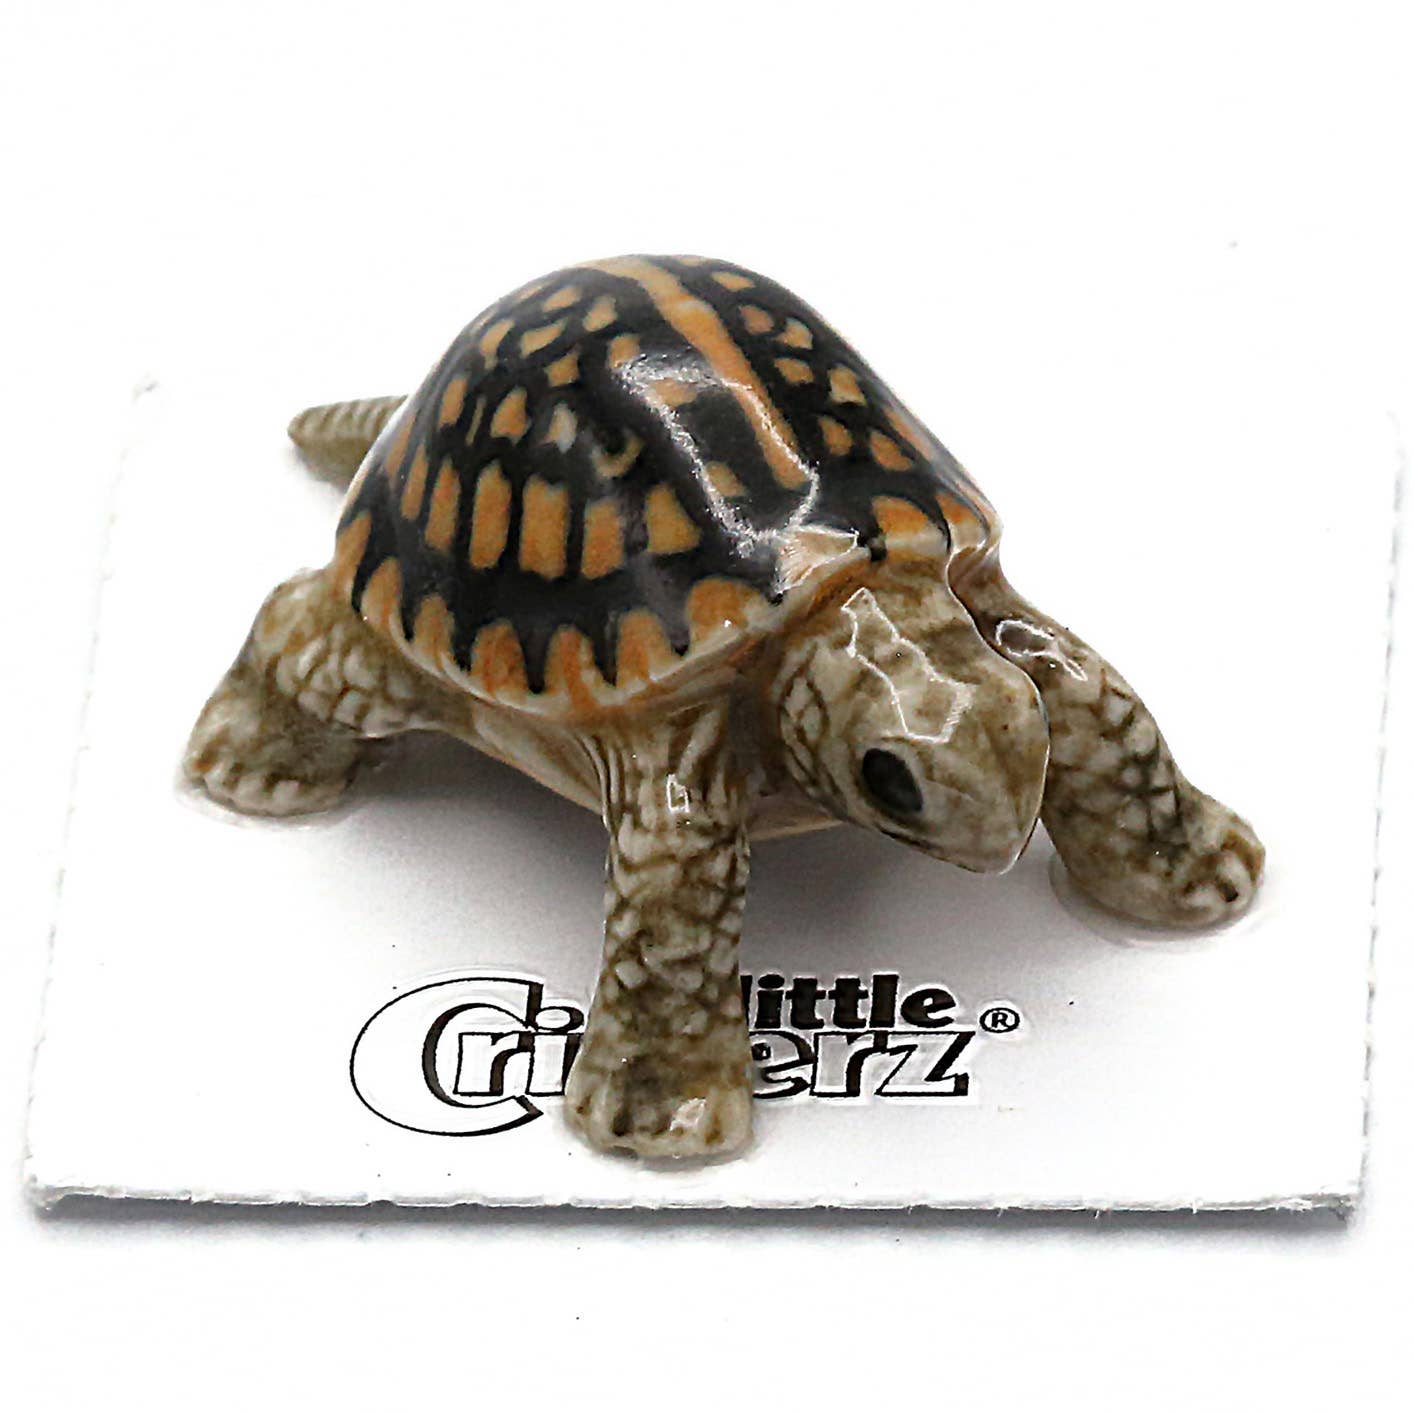 Little Critterz "Dom" Box Turtle